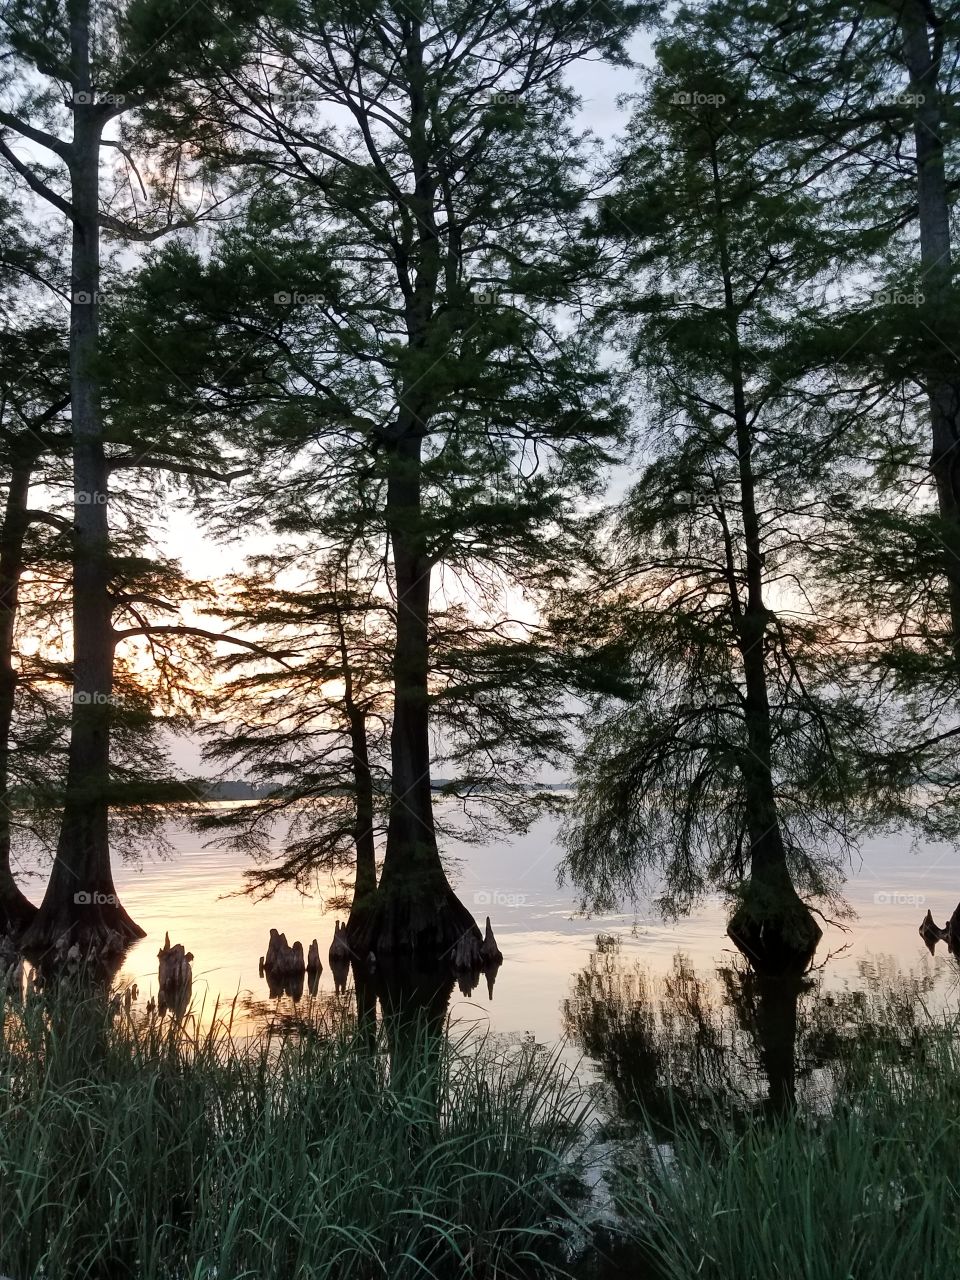 Reelfoot Lake at Sunset